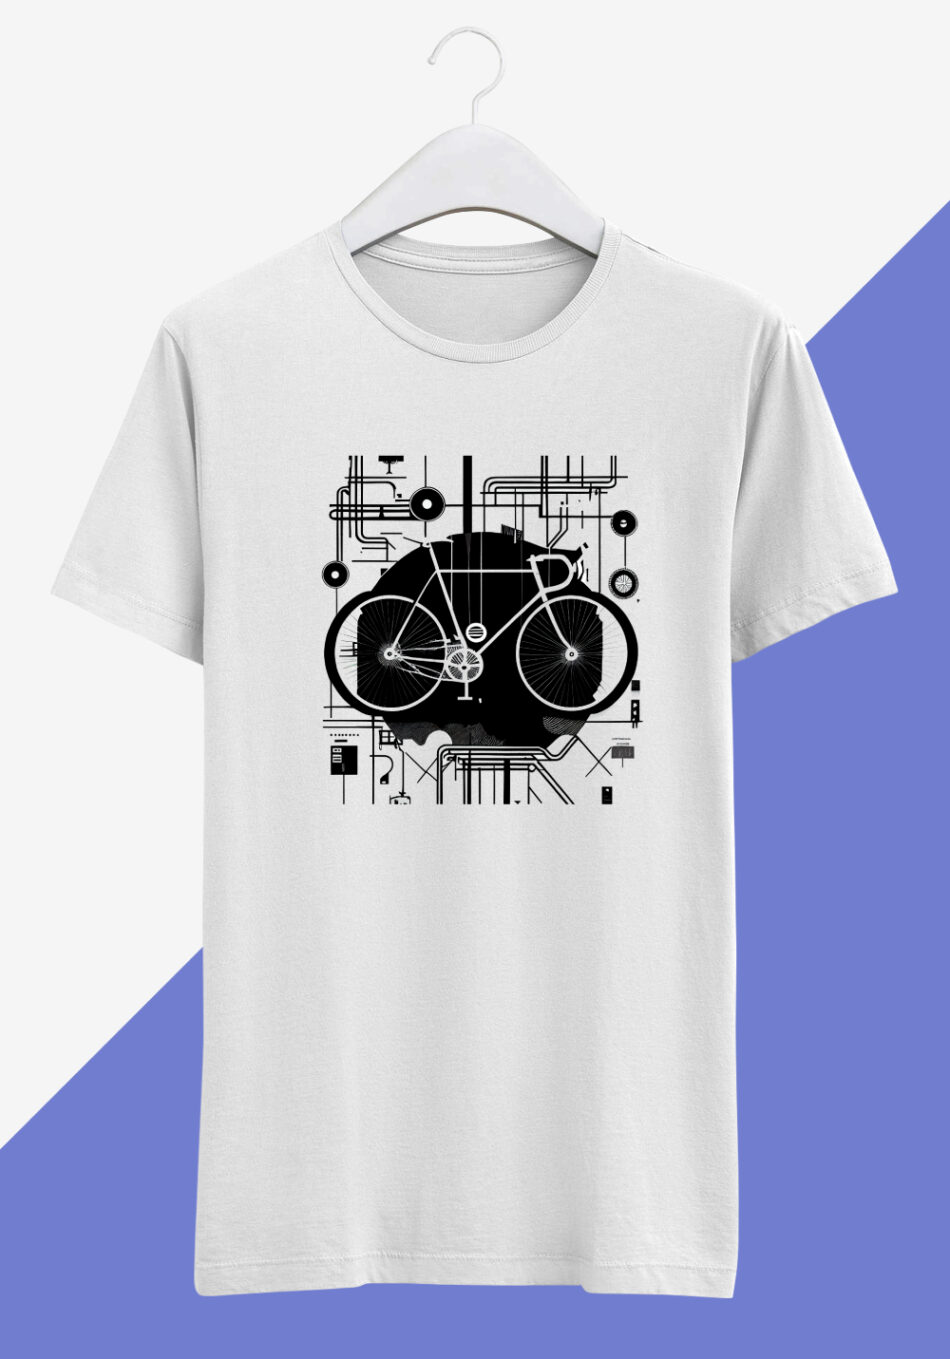 graphic-white-t-shirt-abstract-bike